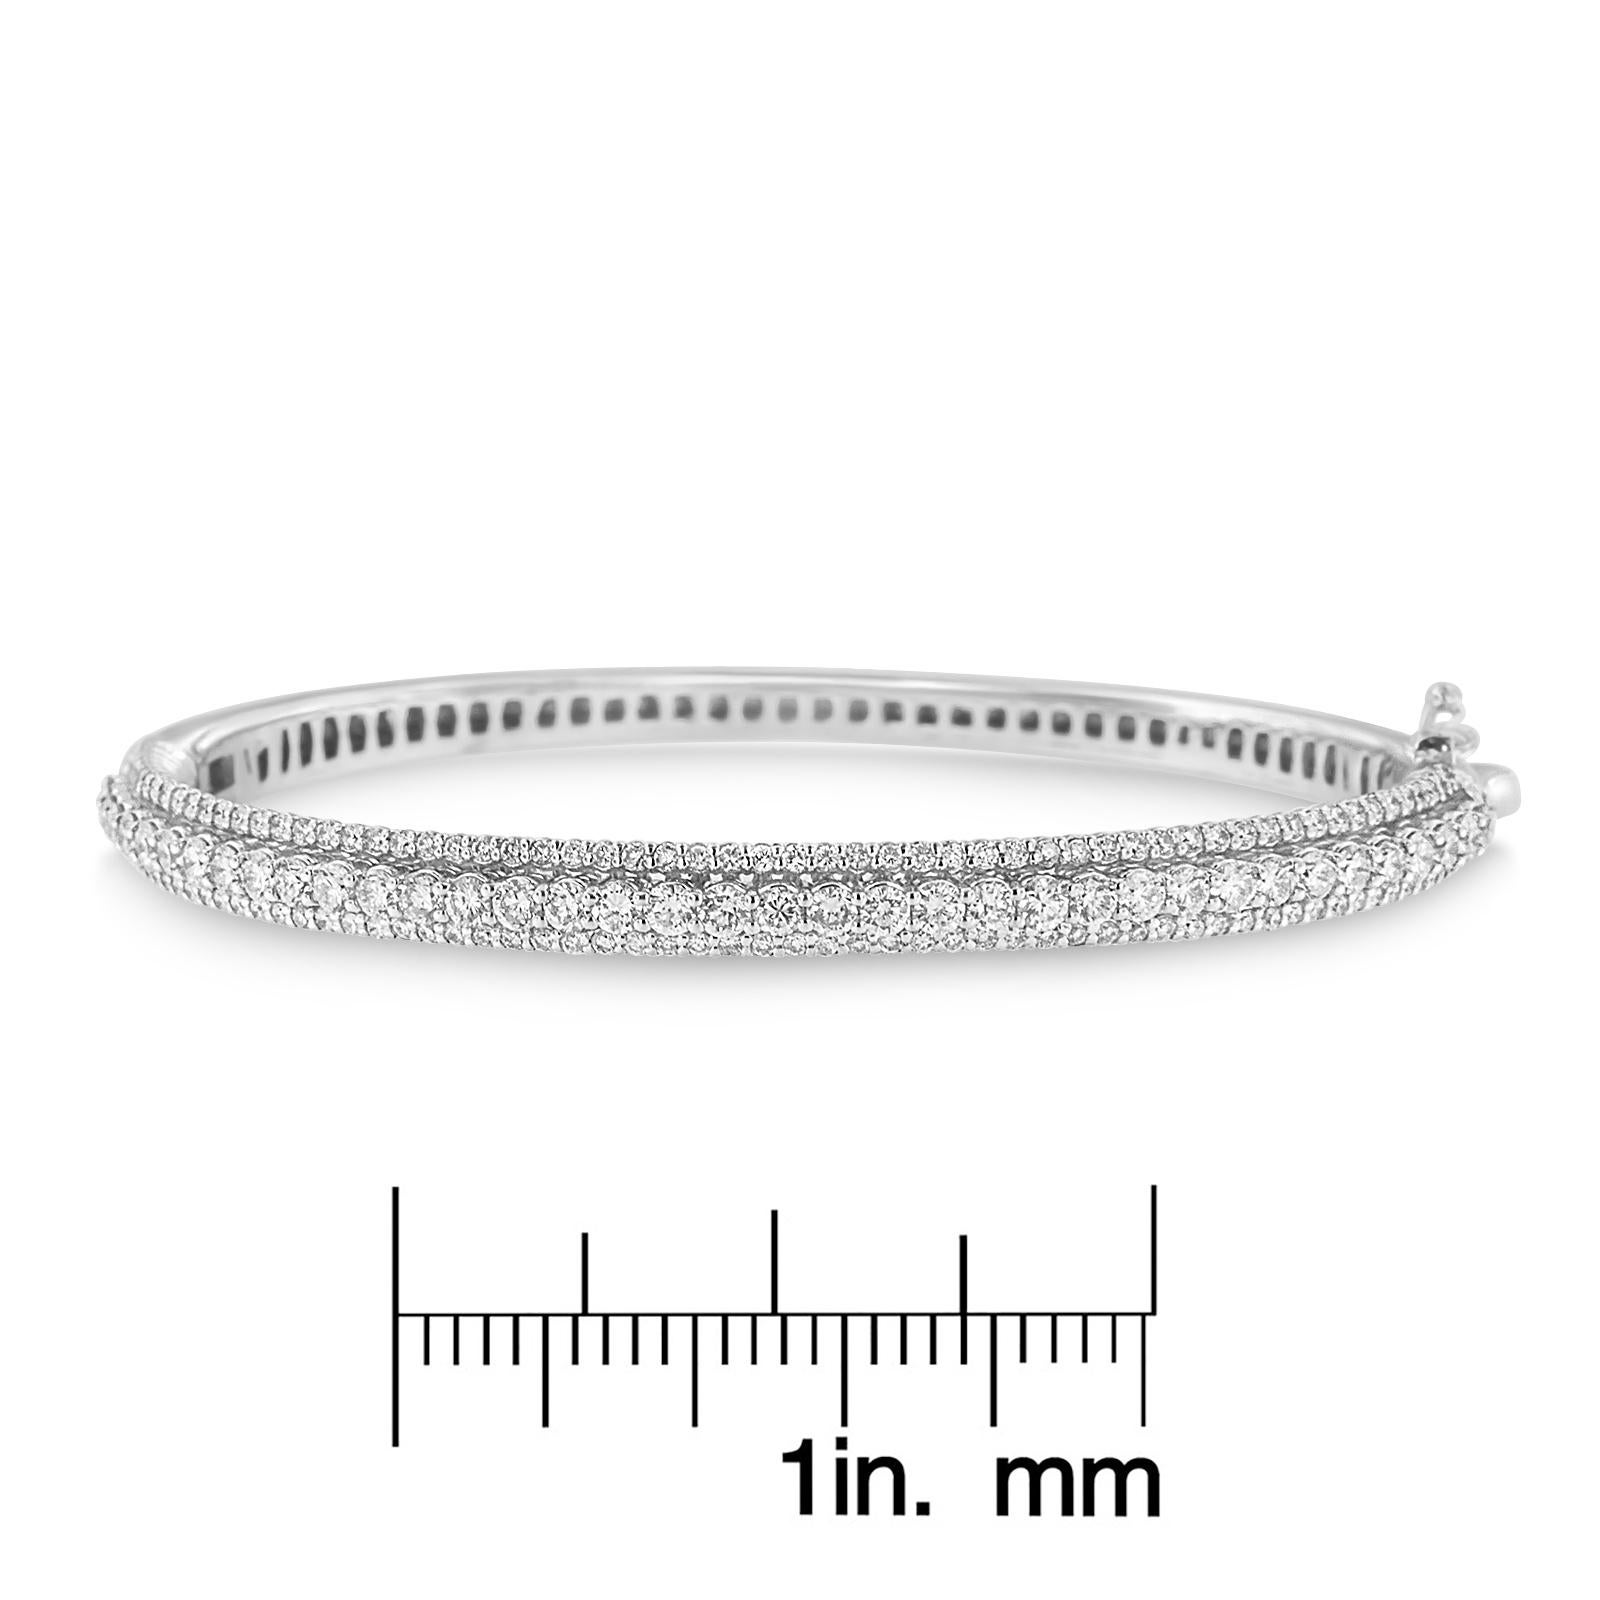 Contemporary 14K White Gold 3.0 Carat Diamond Bangle Bracelet For Sale